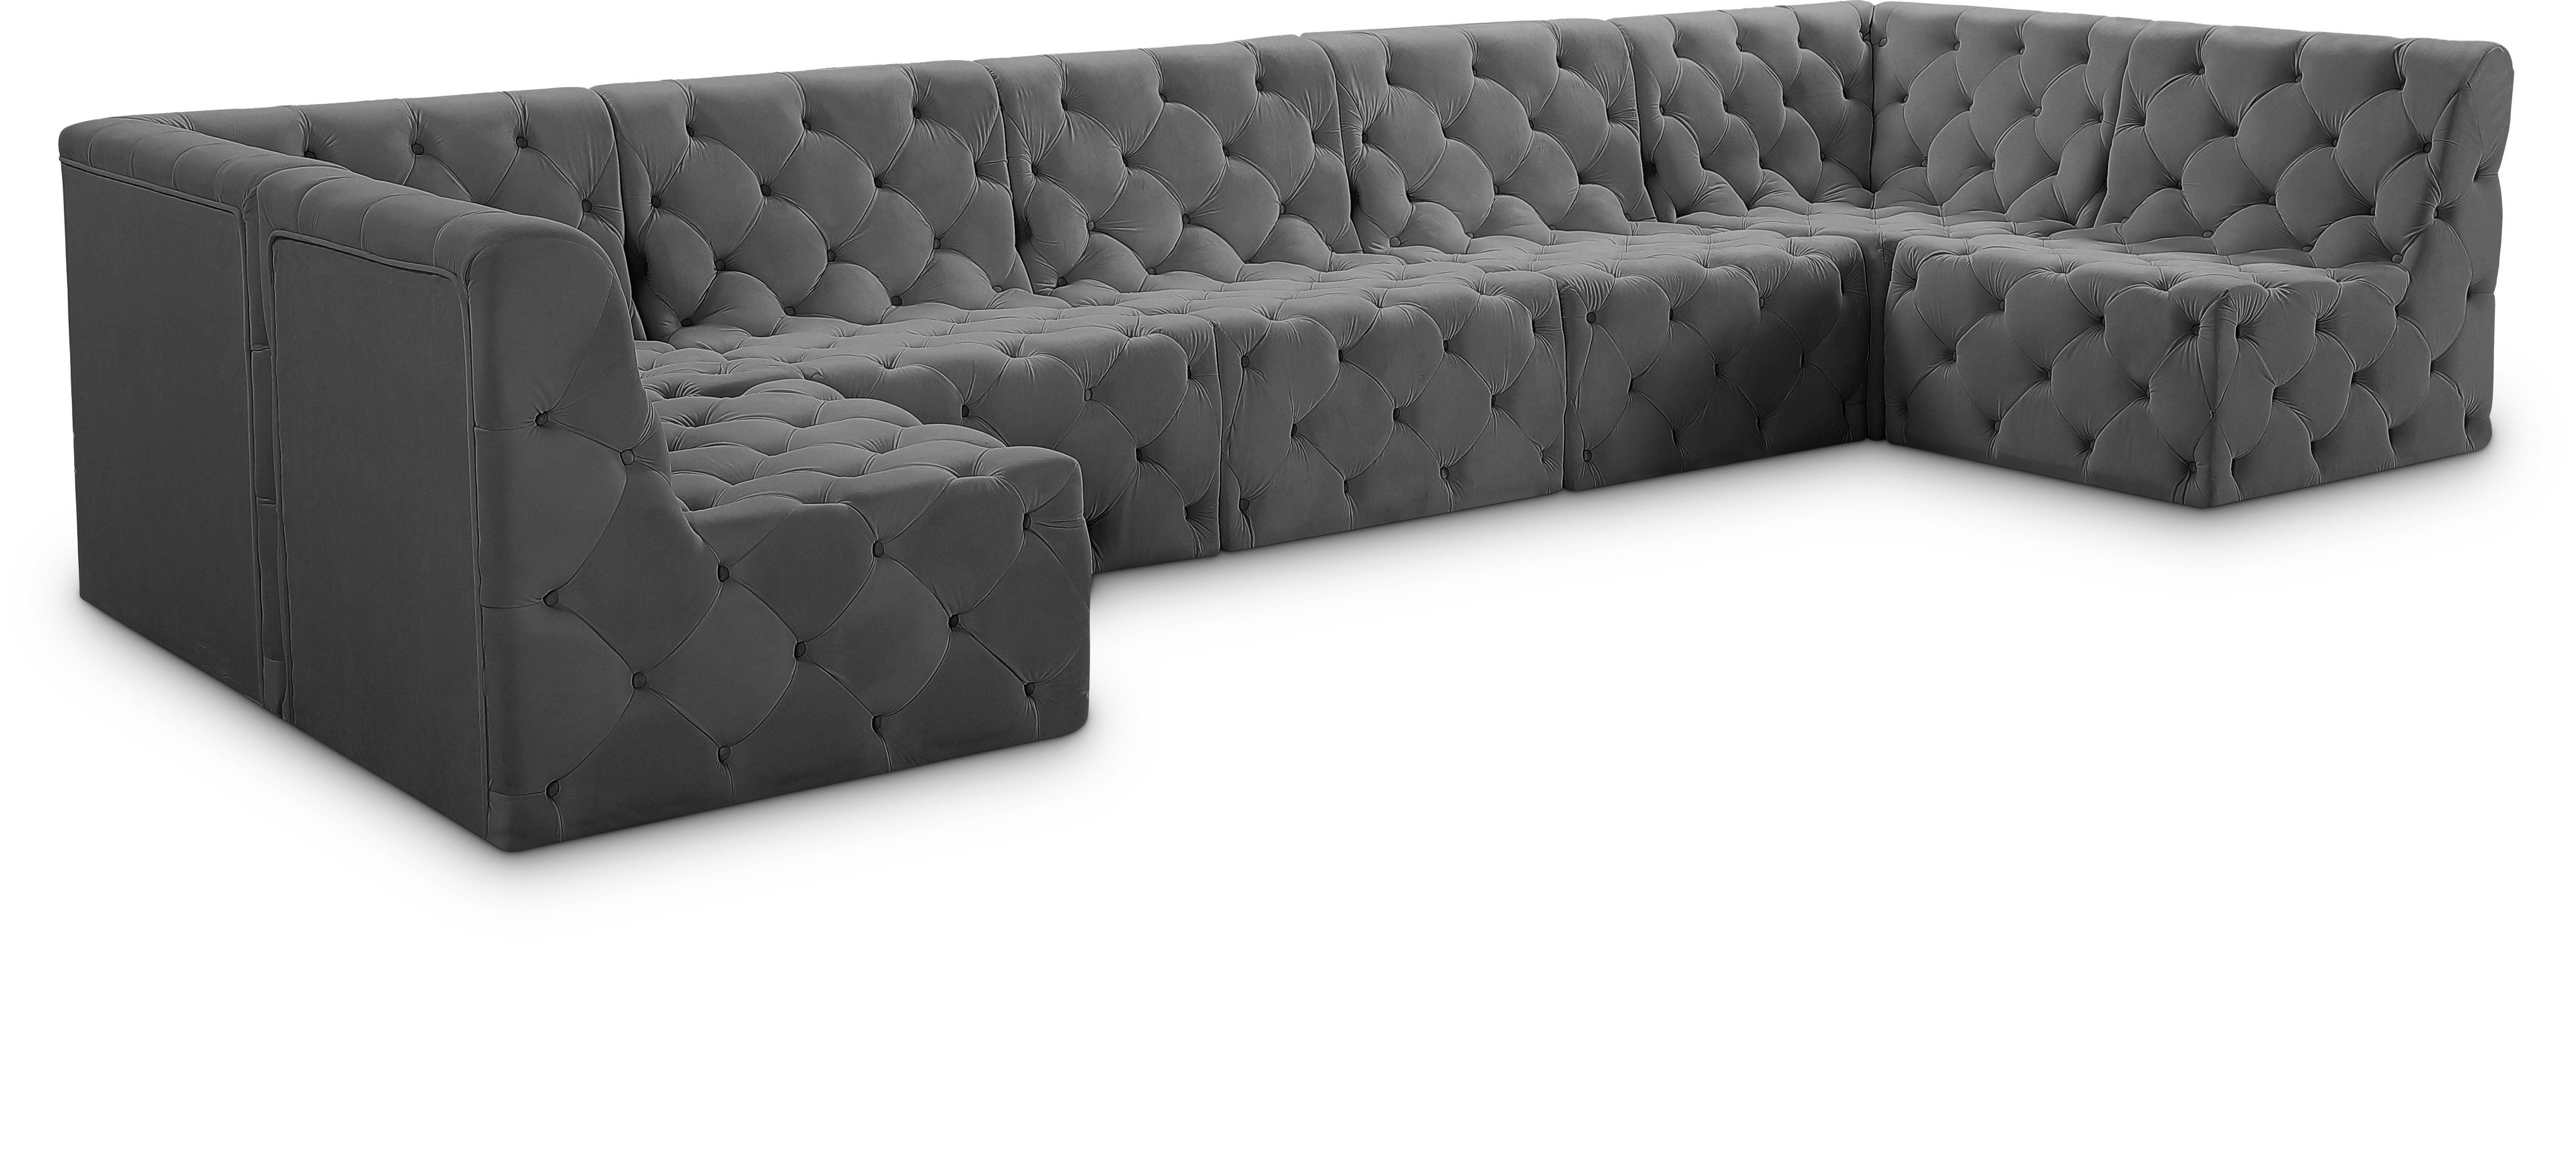 Meridian Furniture - Tuft - Modular Sectional 7 Piece - Gray - Fabric - 5th Avenue Furniture